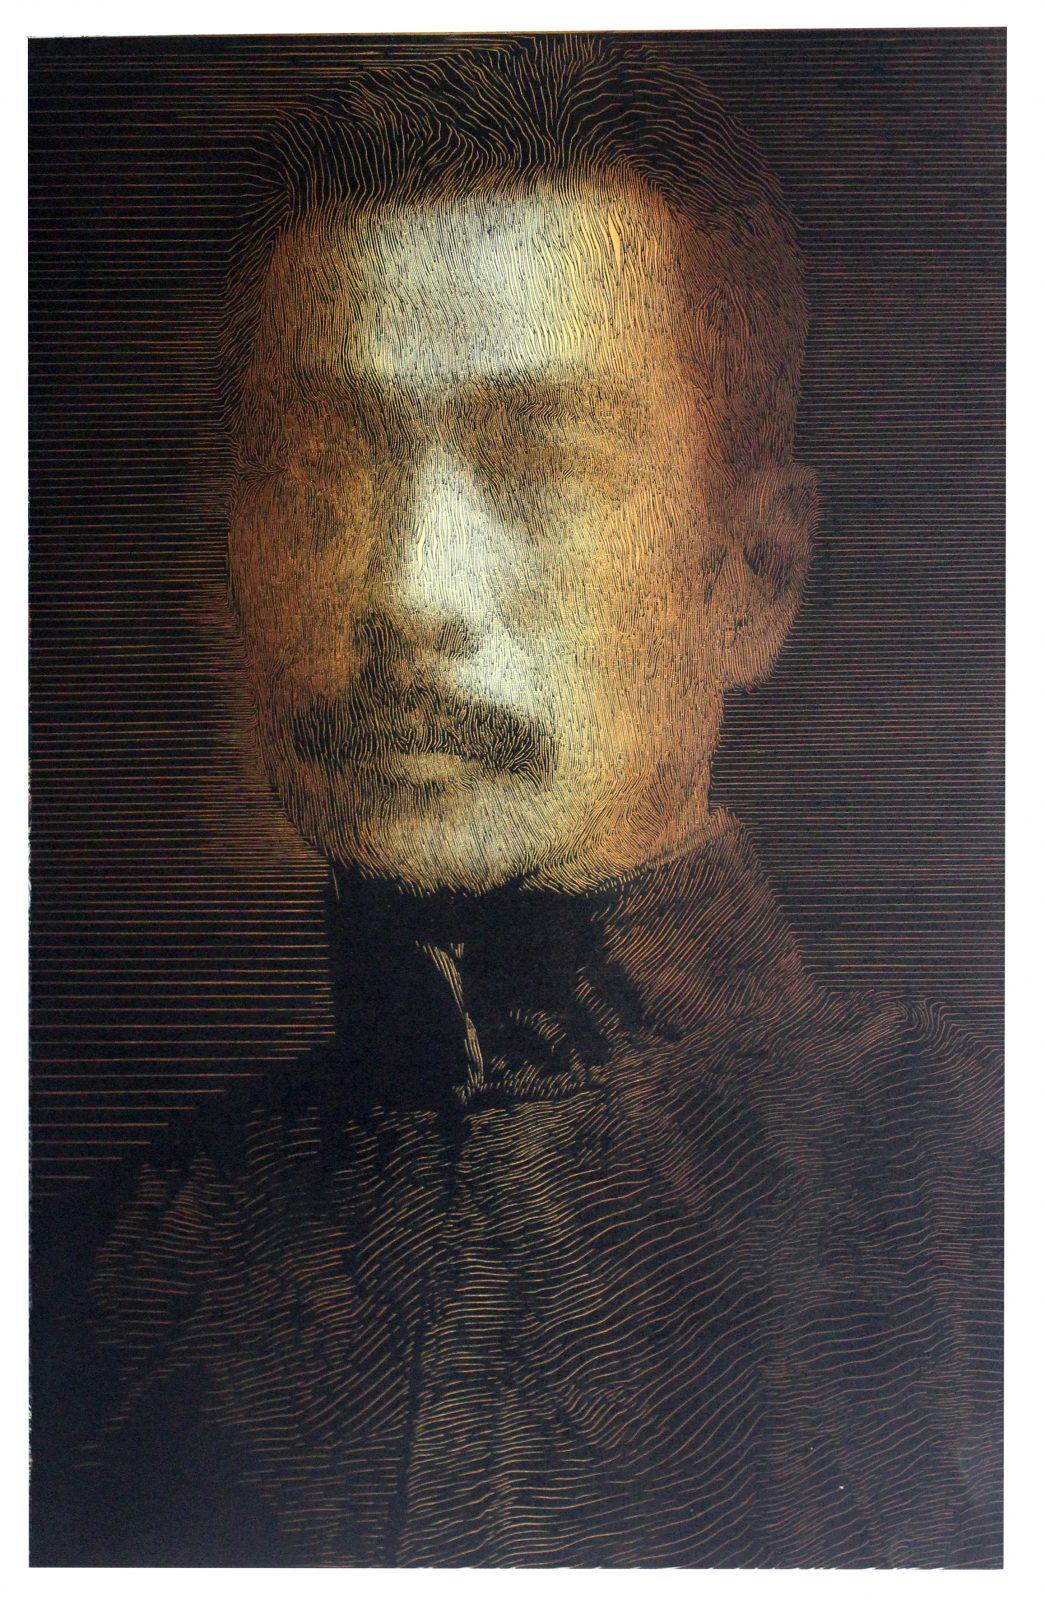 Master 02 '大师 02', Liu Jing 刘京, 90 x 60 cm, 2017 copy